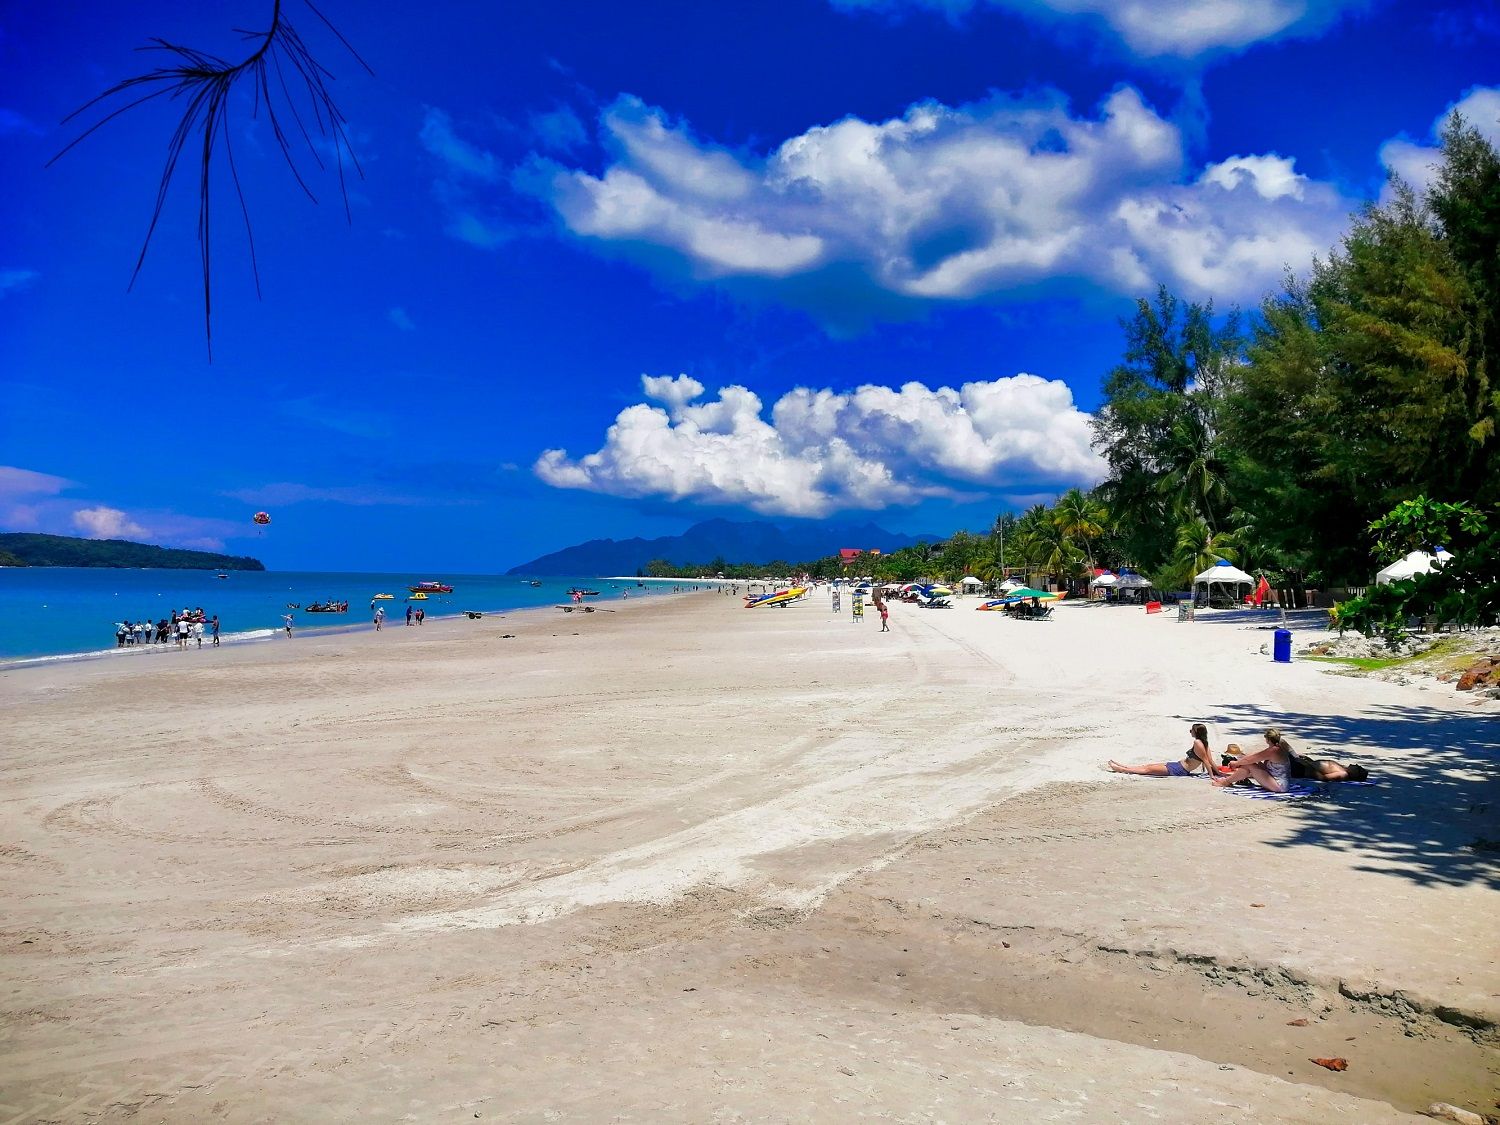 A beach in Langkawi.